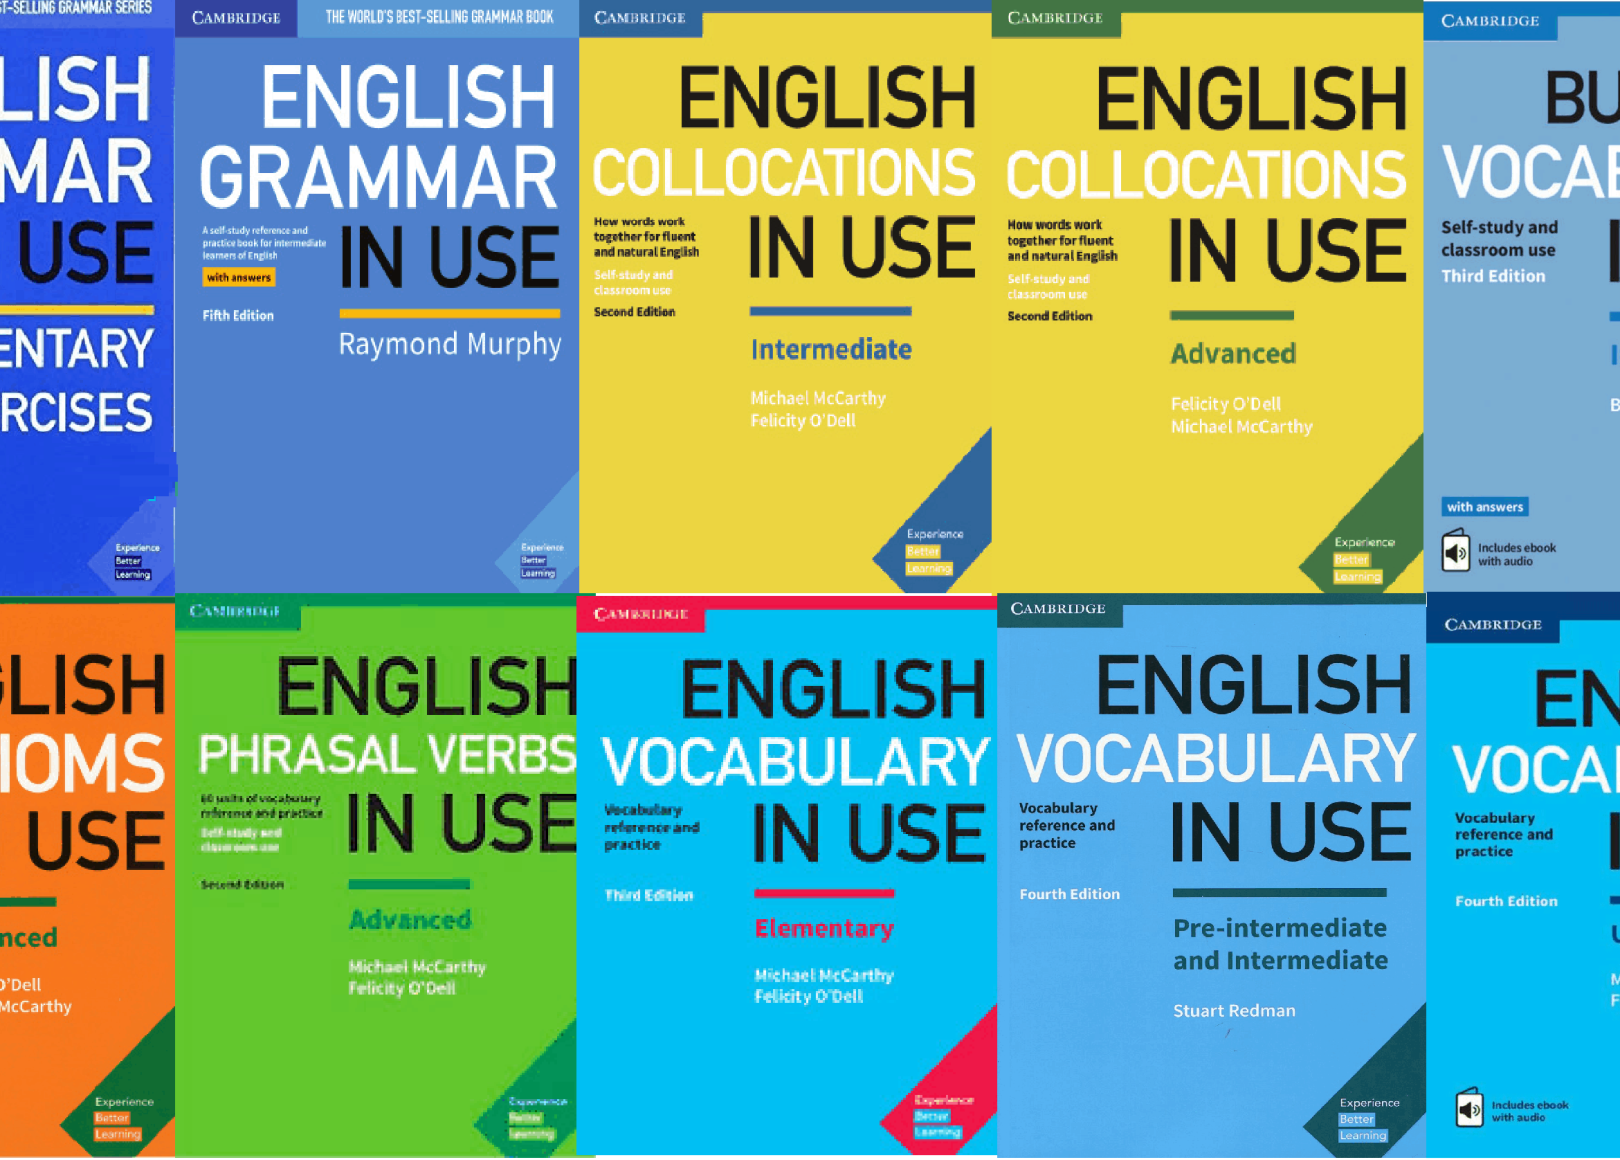 Test english vocabulary in use. Cambridge English Vocabulary in use. English Vocabulary in use pre-Intermediate and Intermediate издание. English in use Cambridge. Vocabulary in use Advanced.